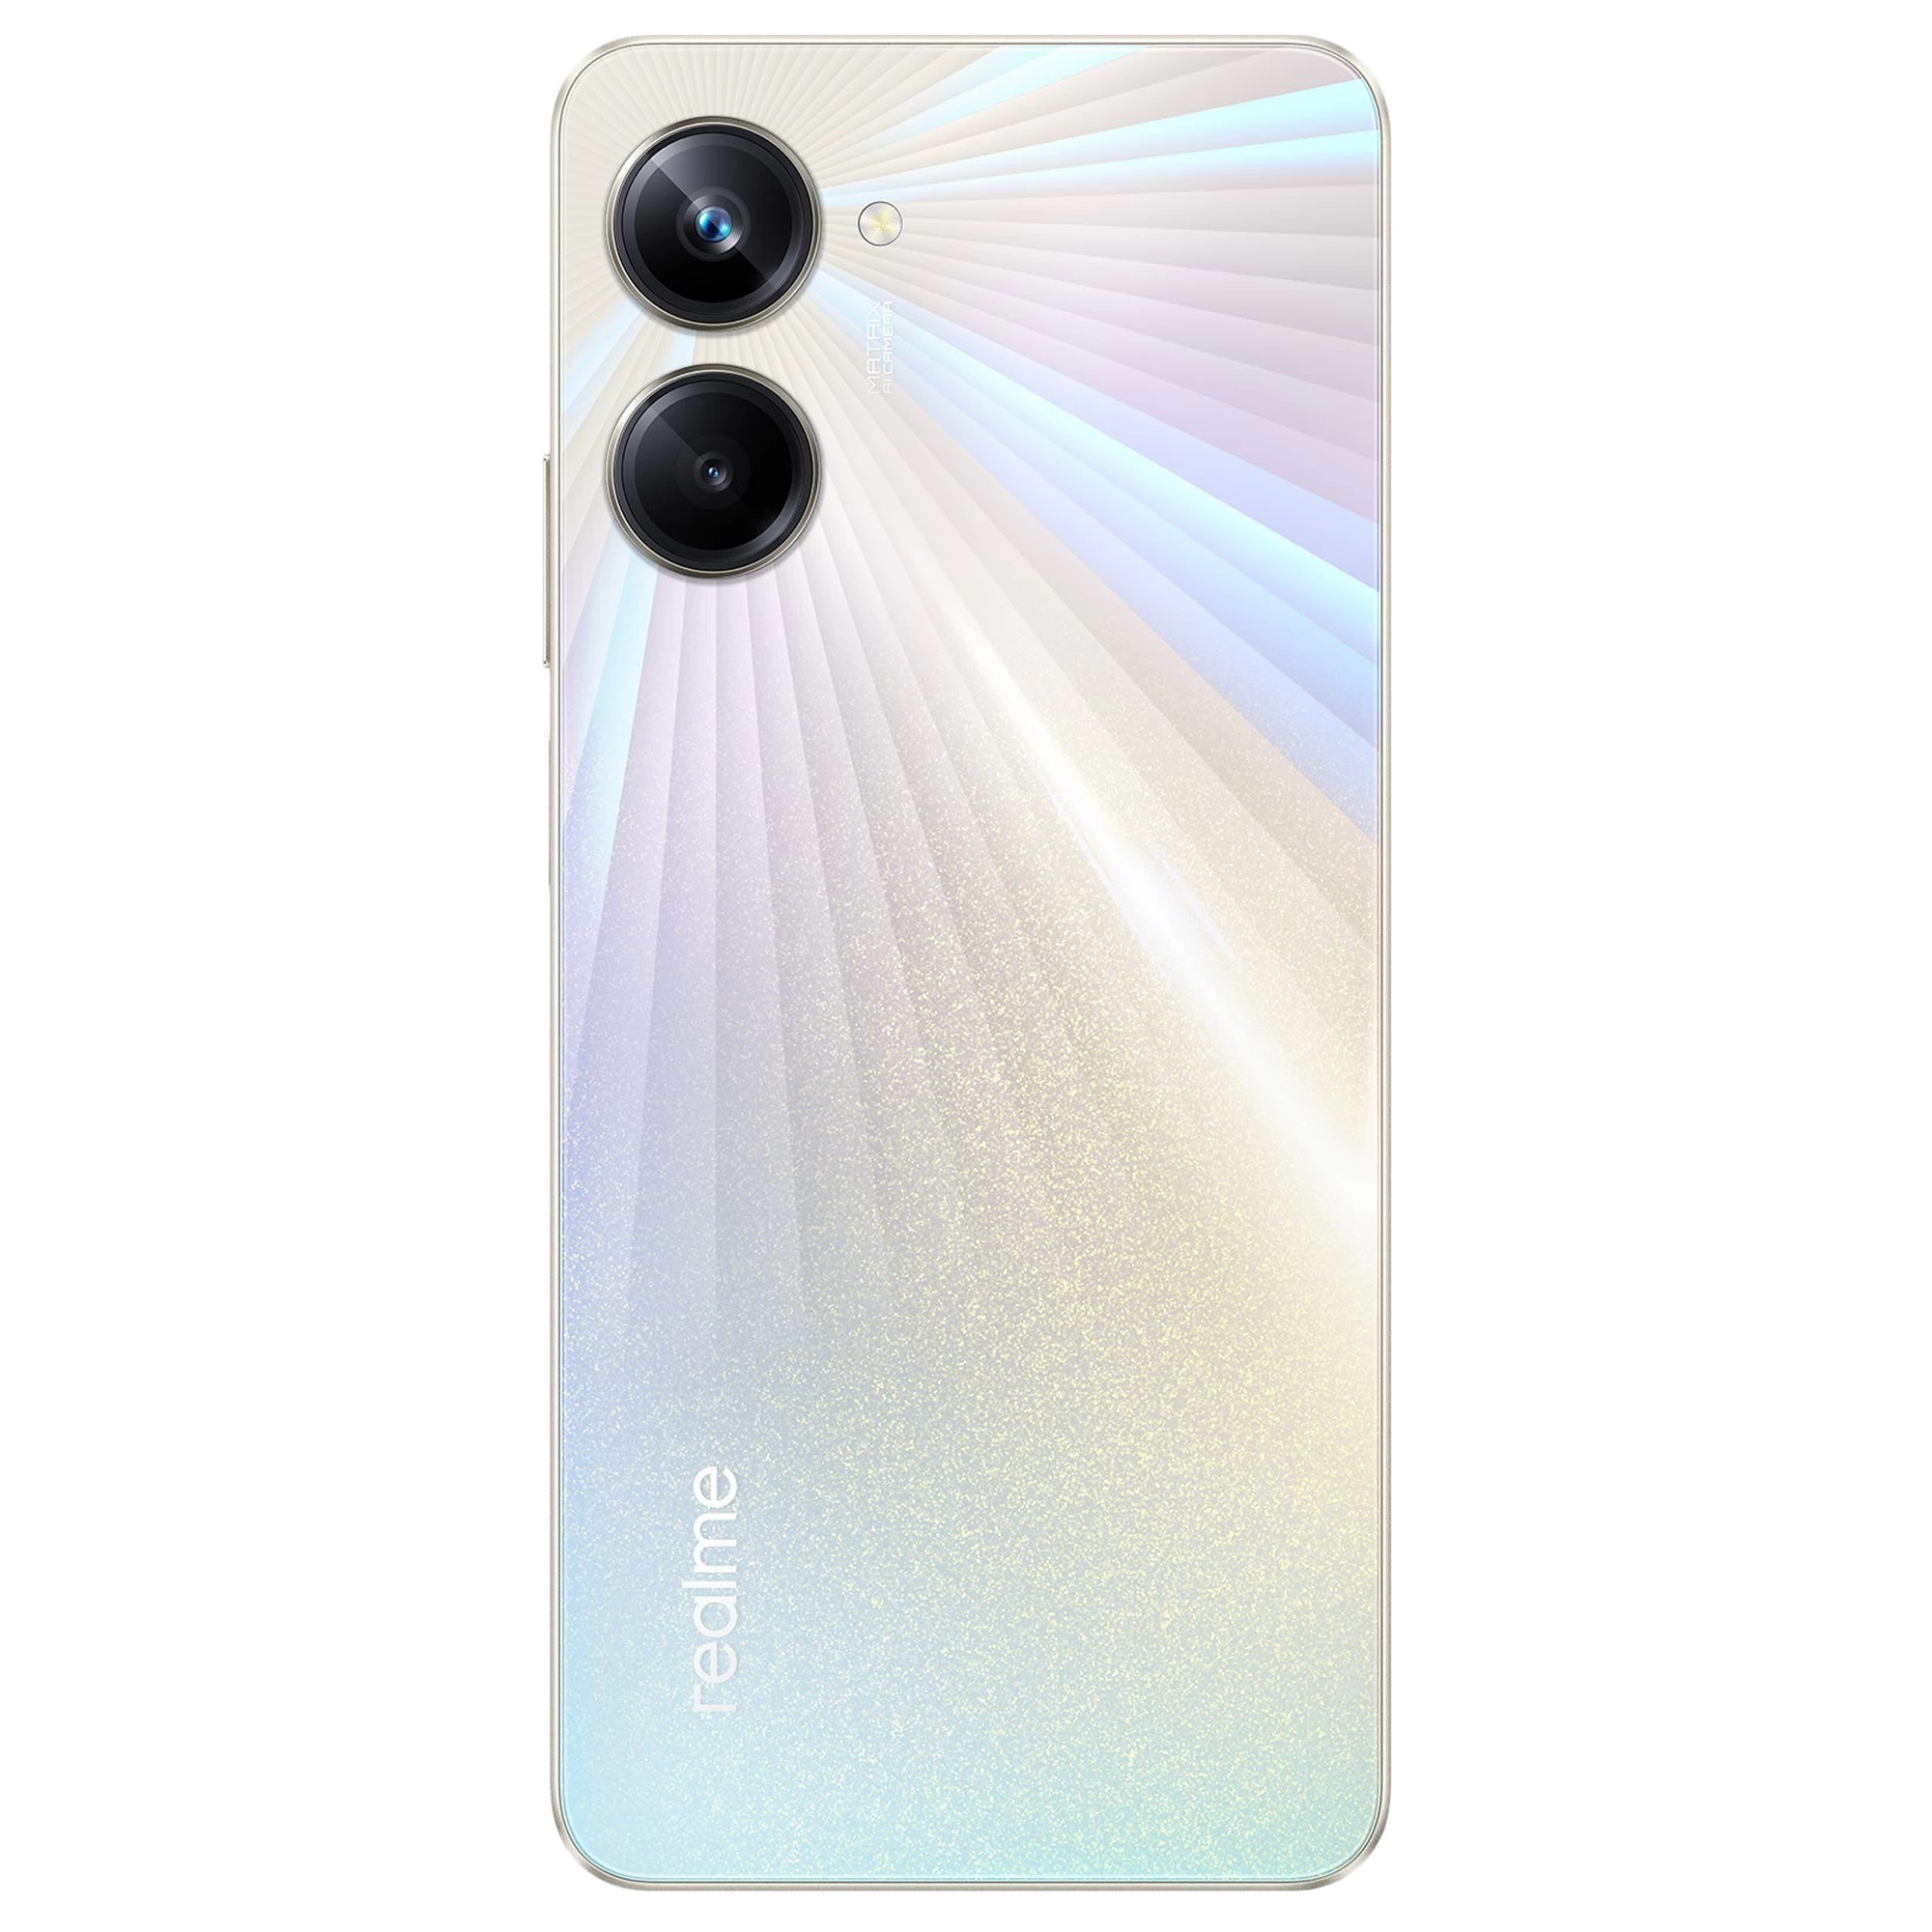 Buy Realme 10 Pro 5G (8GB RAM, 128GB, Dark Matter) Online - Croma